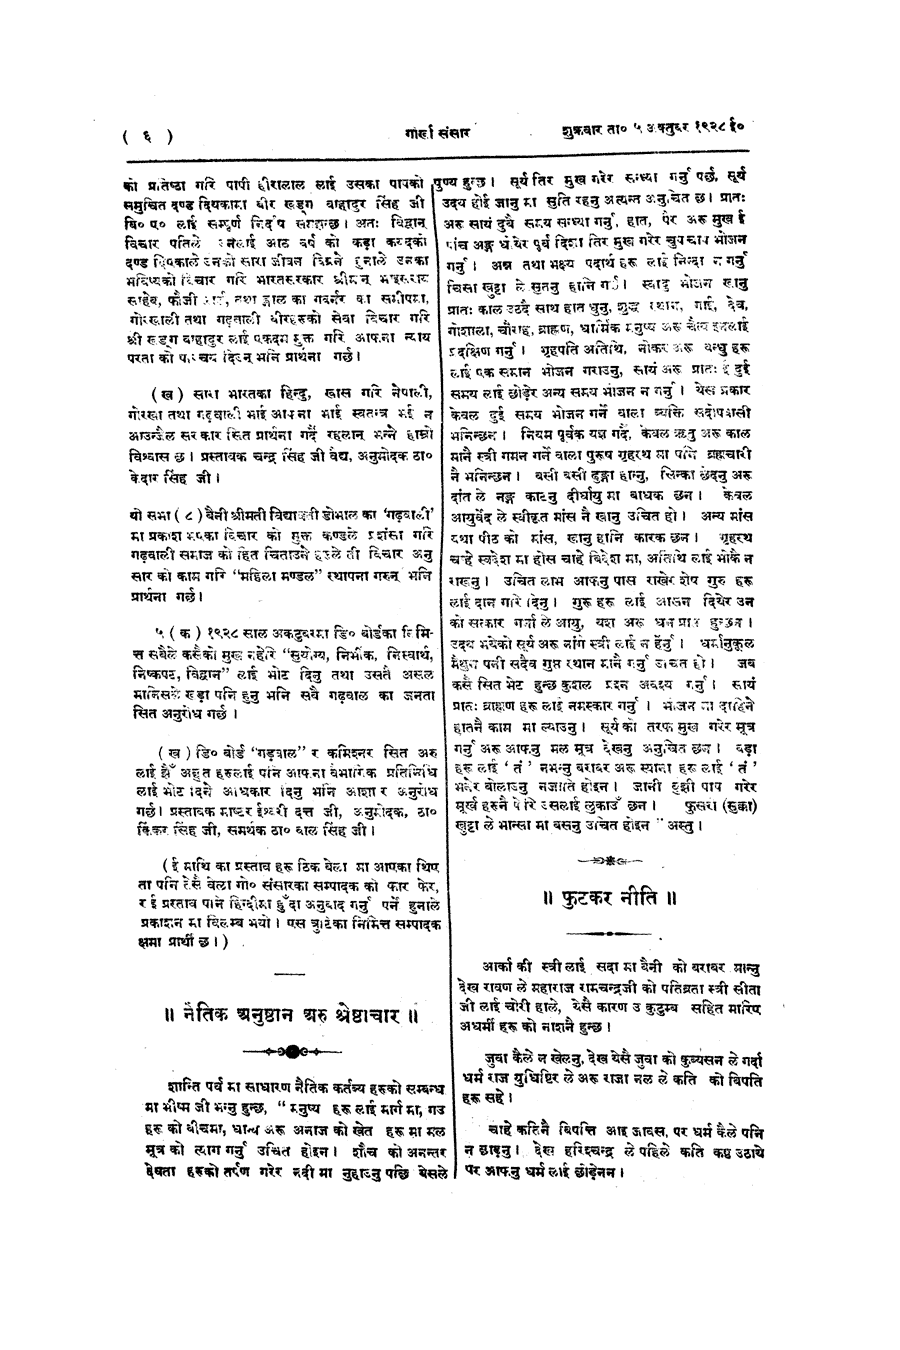 Gorkha Sansar, 5 Oct 1928, page 6